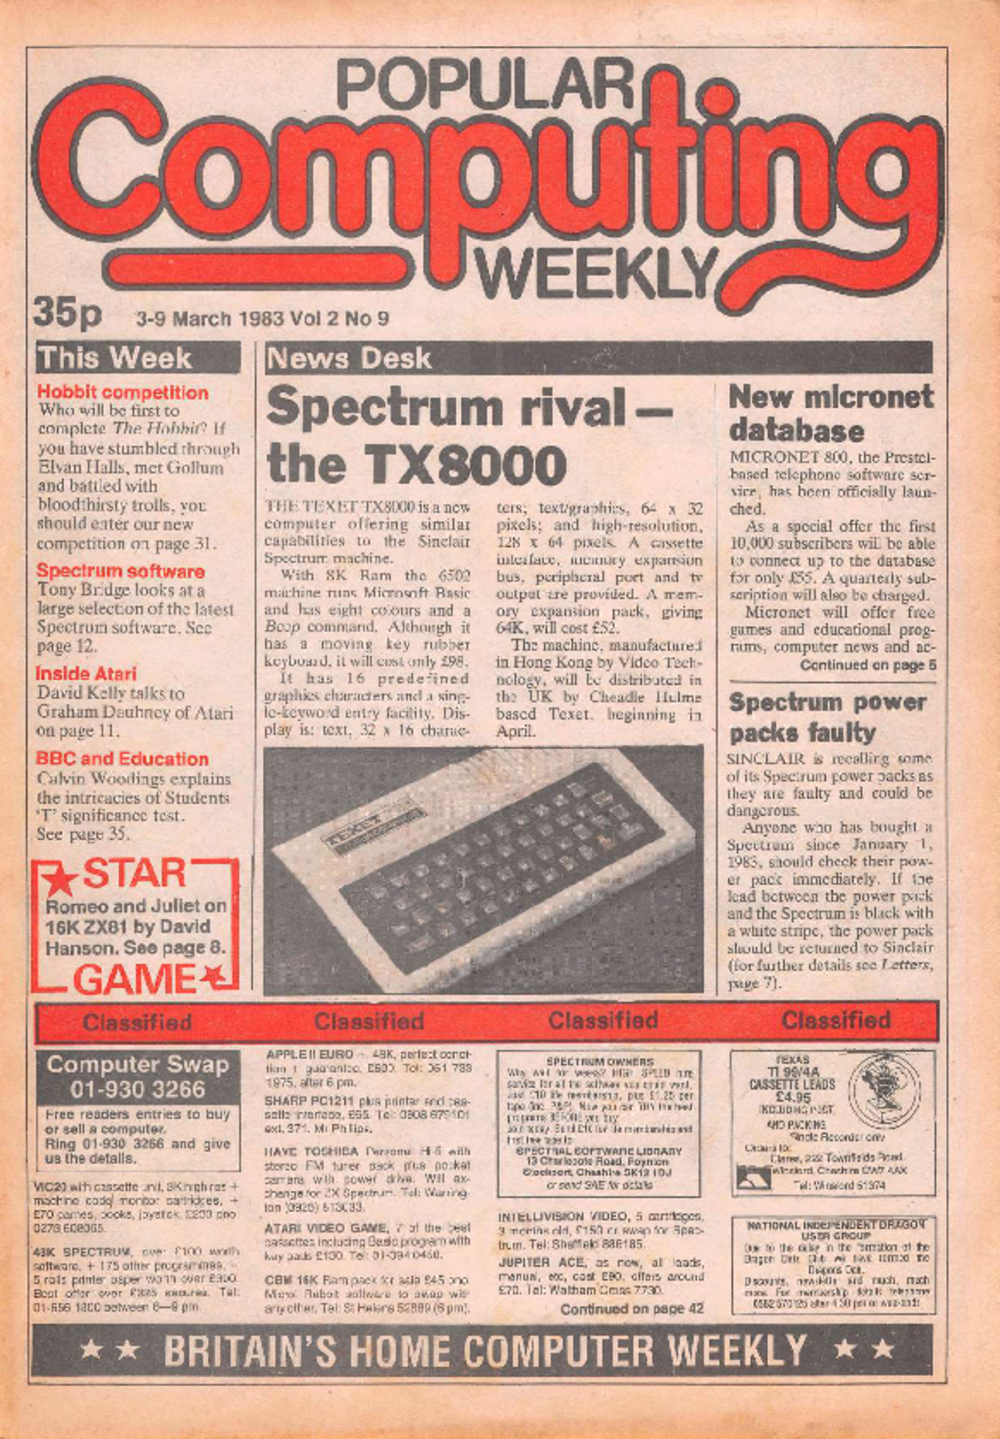 Article: Popular Computing Weekly Vol 2 No 09 - 3-9 March 1983